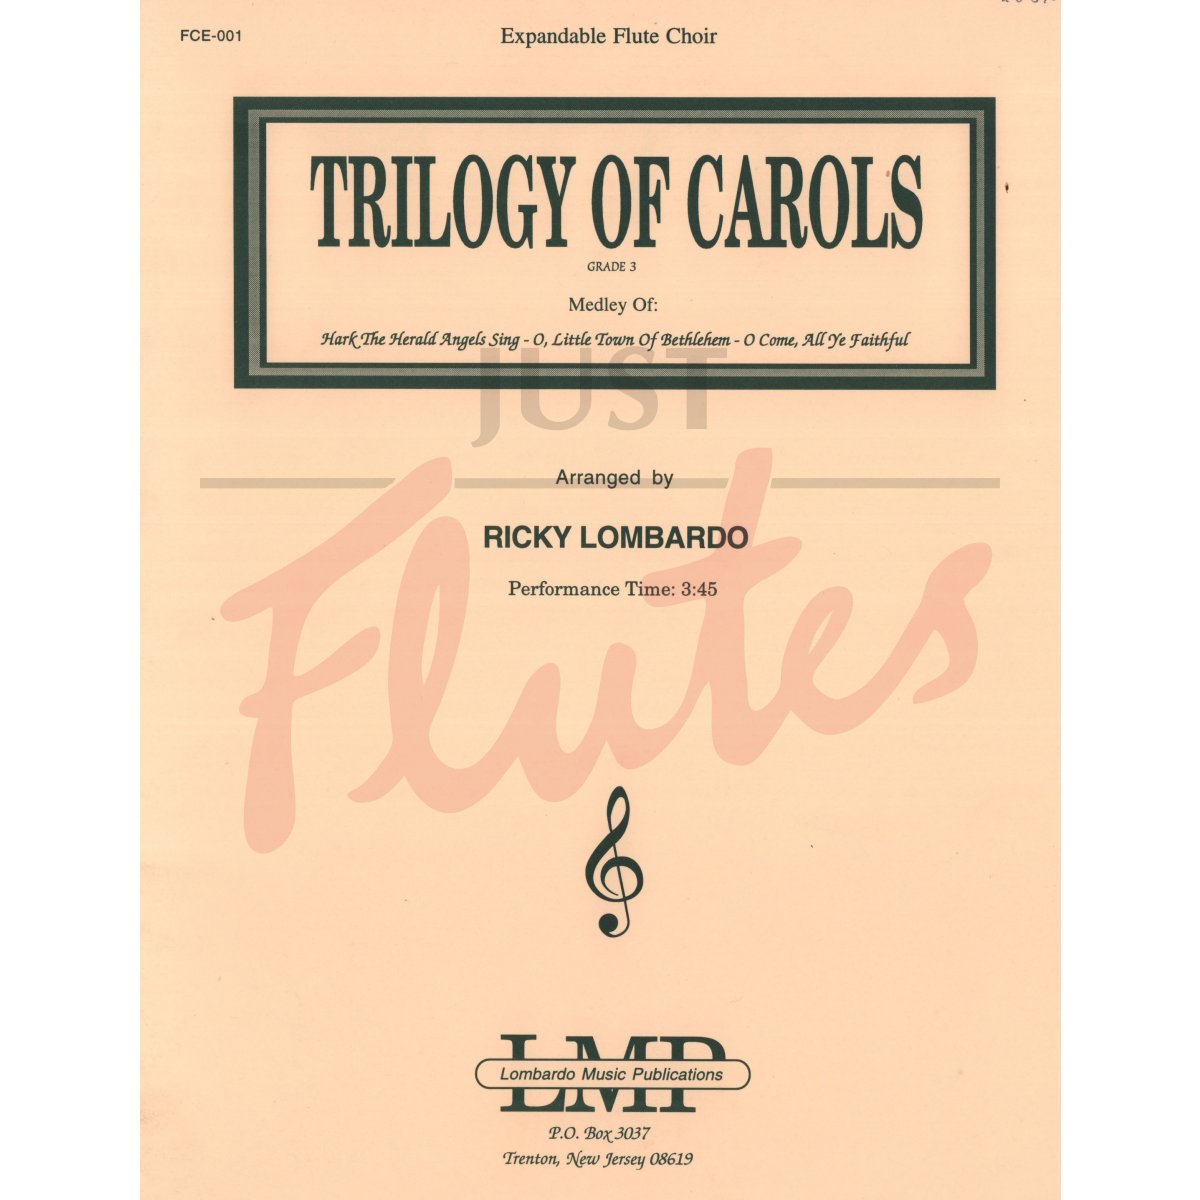 Trilogy of Carols for Expandable Flute Choir